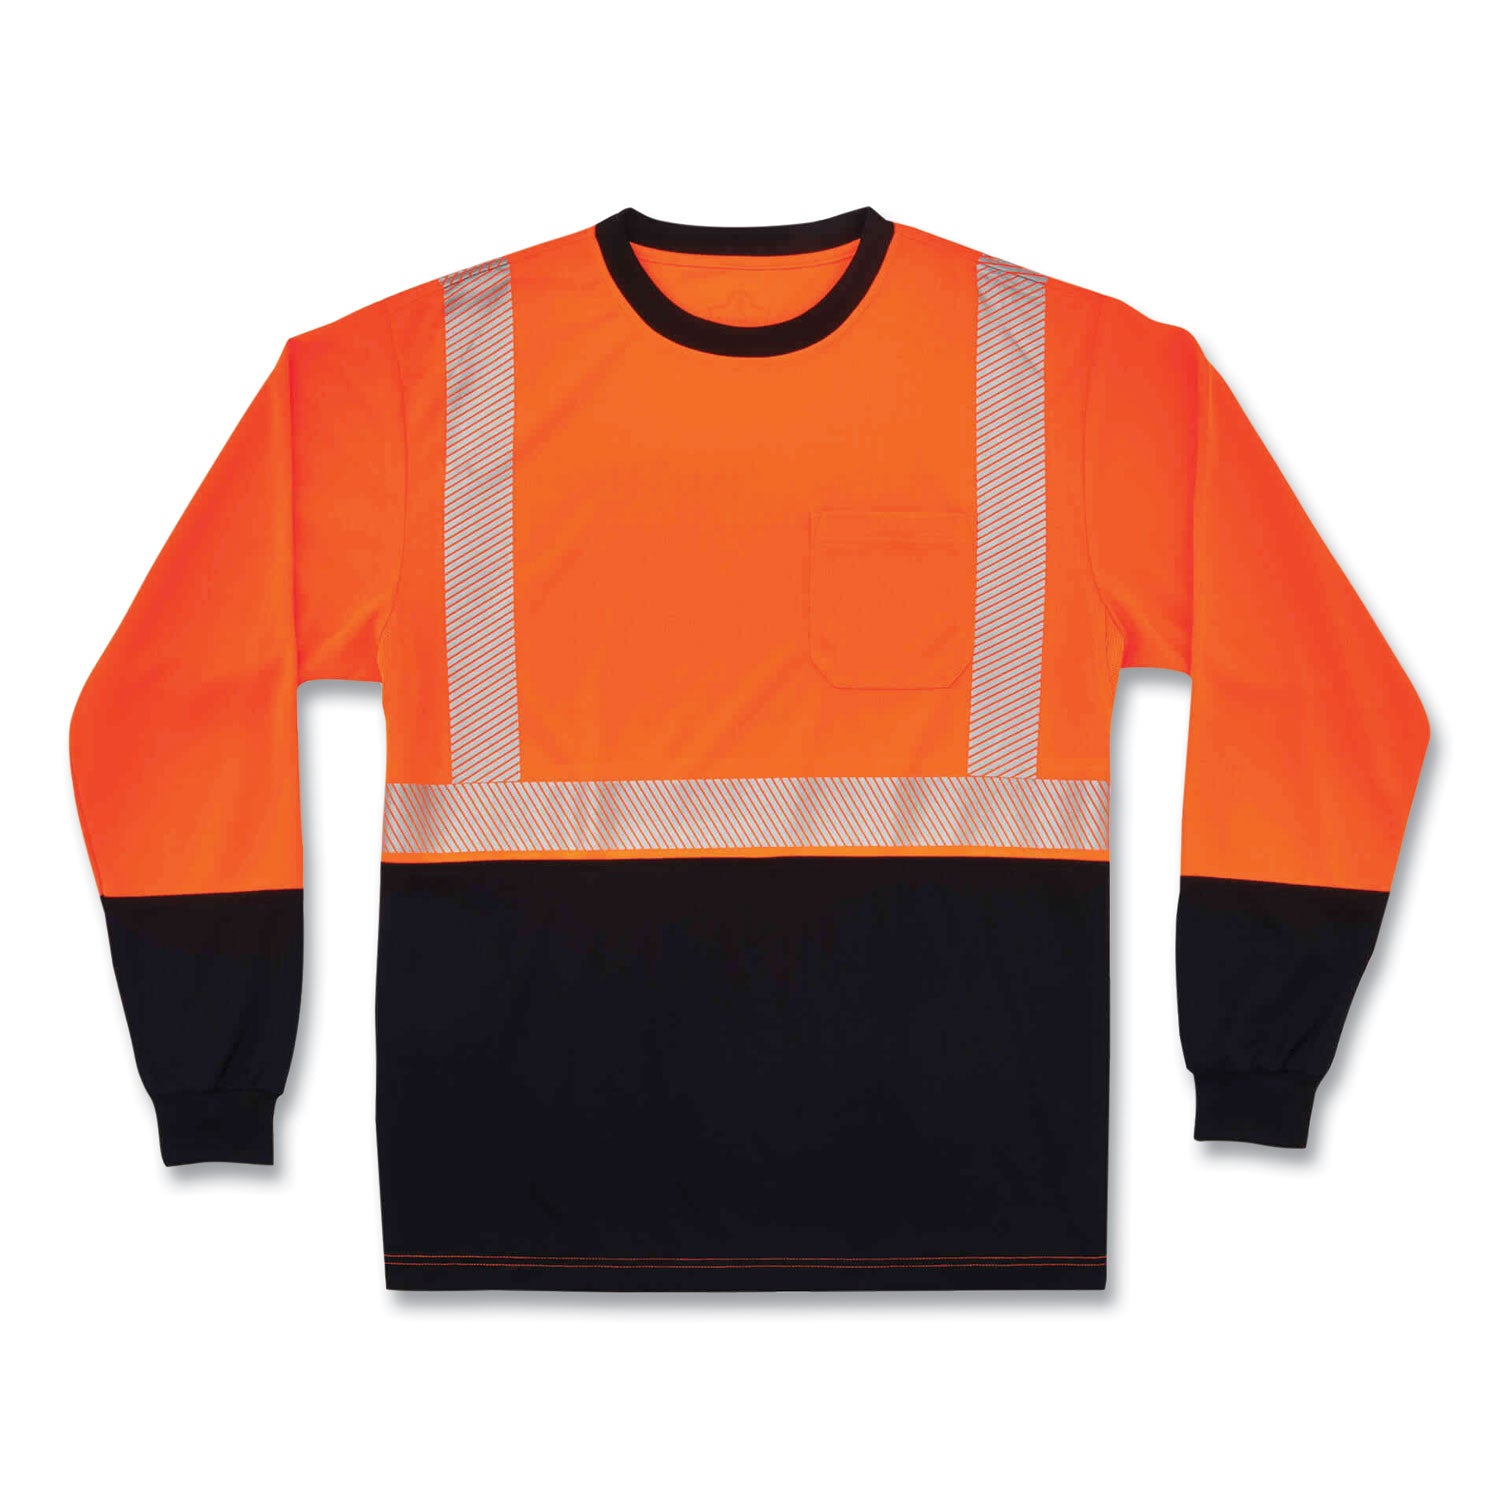 glowear-8281bk-class-2-long-sleeve-shirt-with-black-bottom-polyester-5x-large-orange-ships-in-1-3-business-days_ego22689 - 1